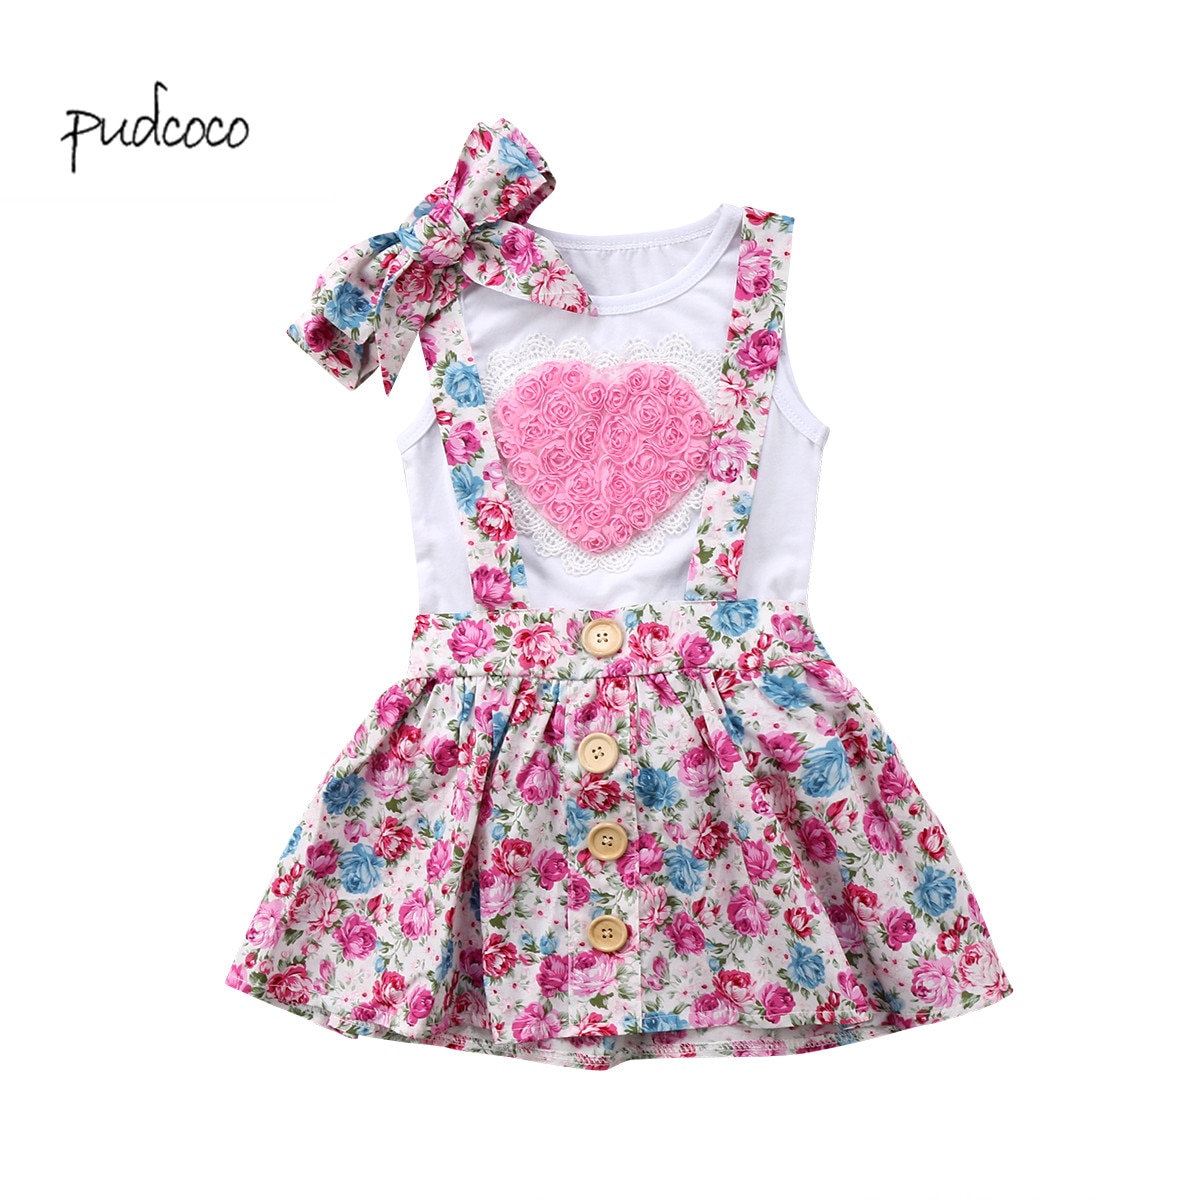 Pudcoco 3 PCS Bloemen Baby Meisje Outfits Kleding T-shirt Top Broek/Rokken Haarband Sets